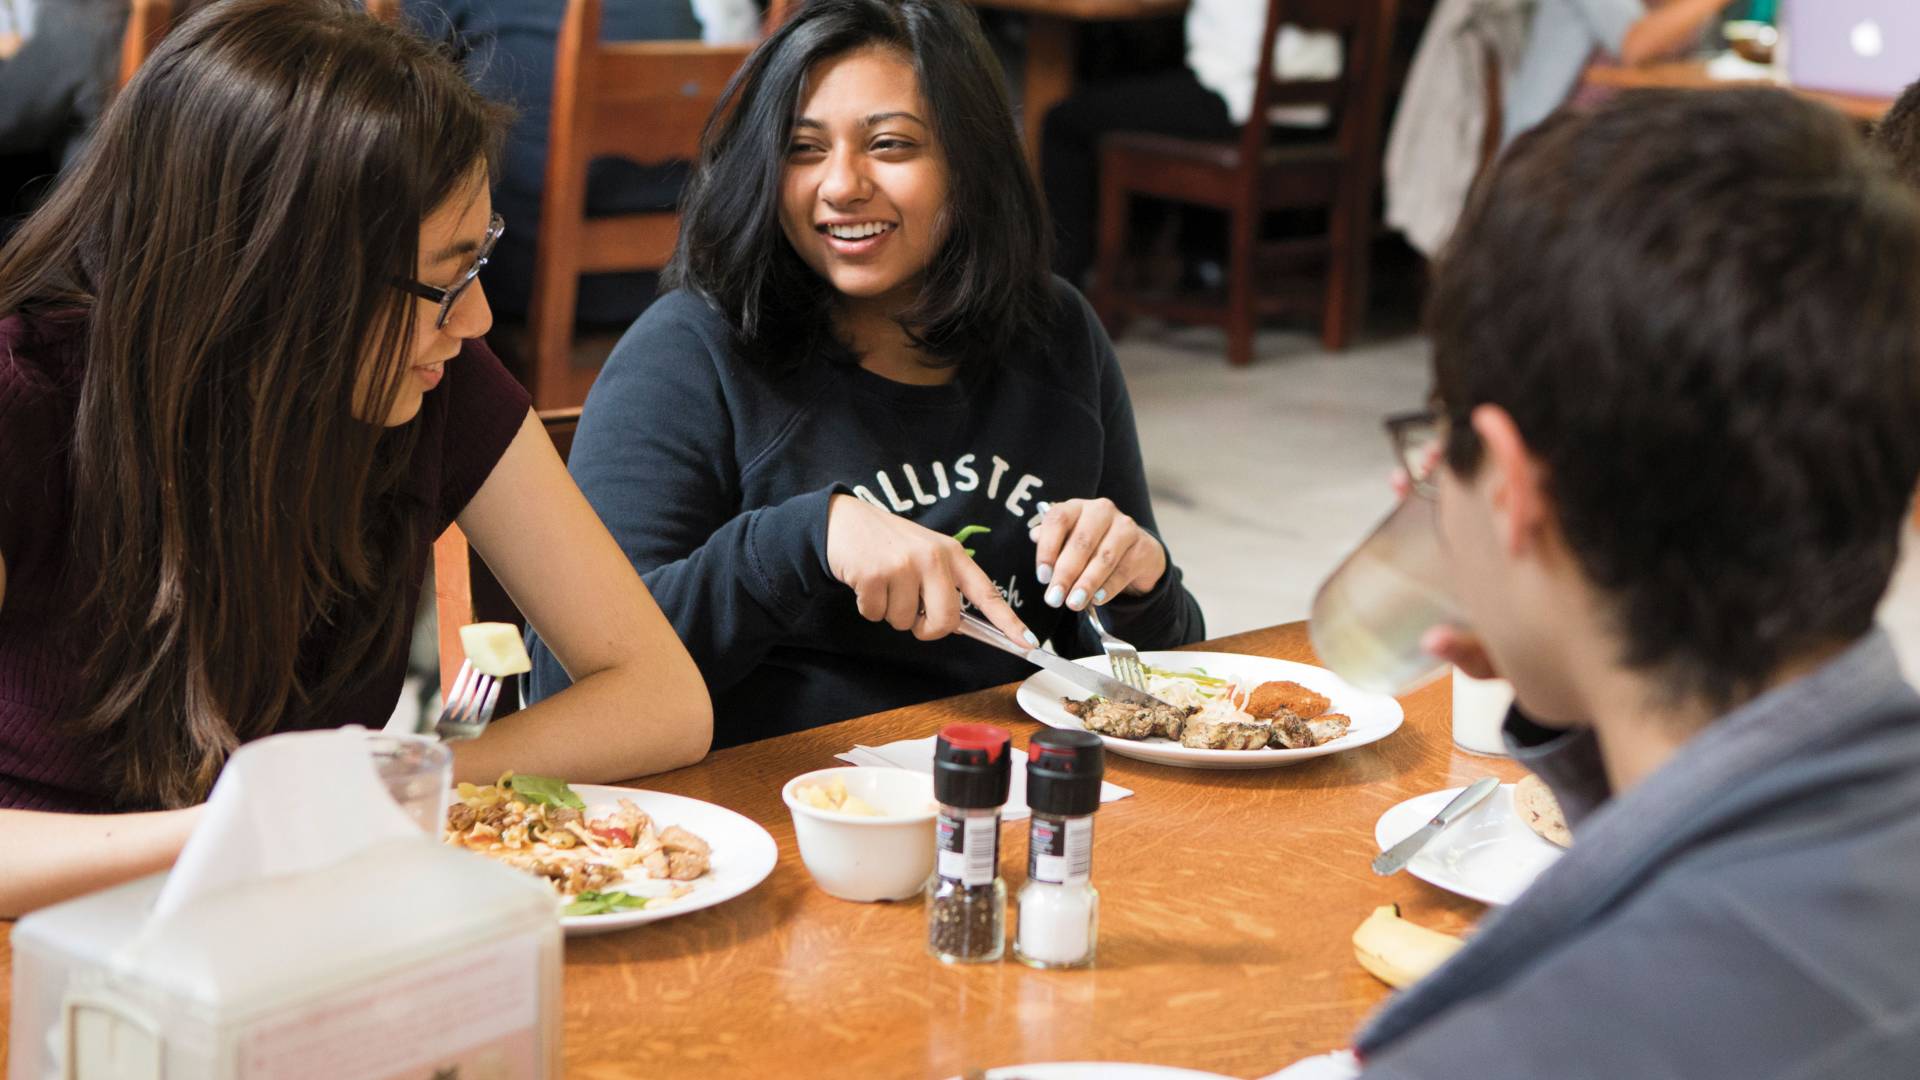 Binita Gupta eating with friends in dining hall